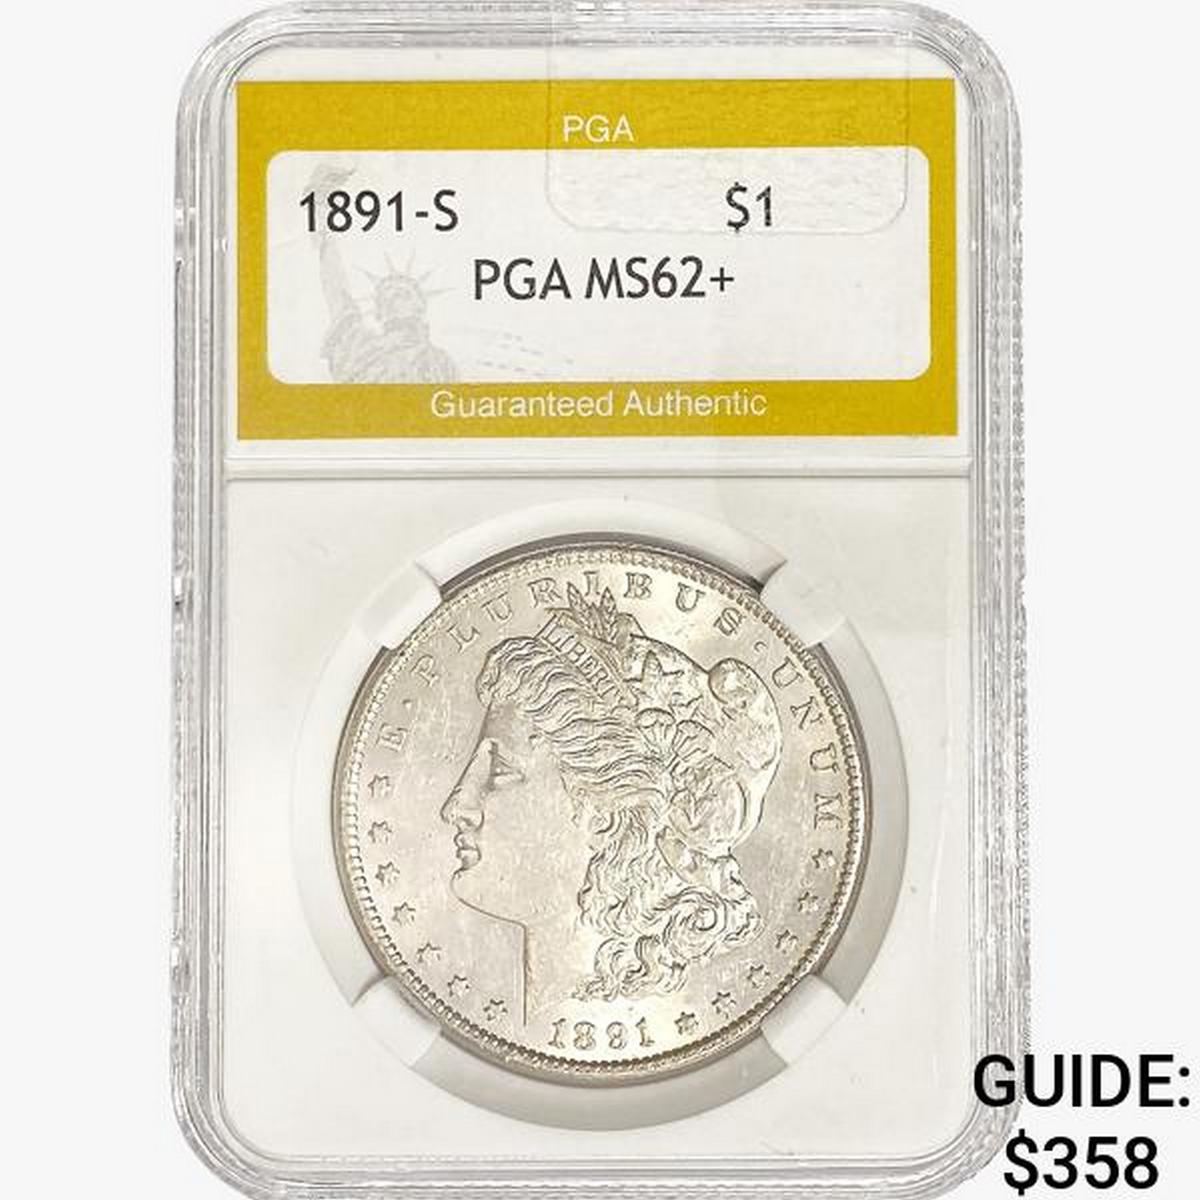 1891-S Morgan Silver Dollar PGA MS62+